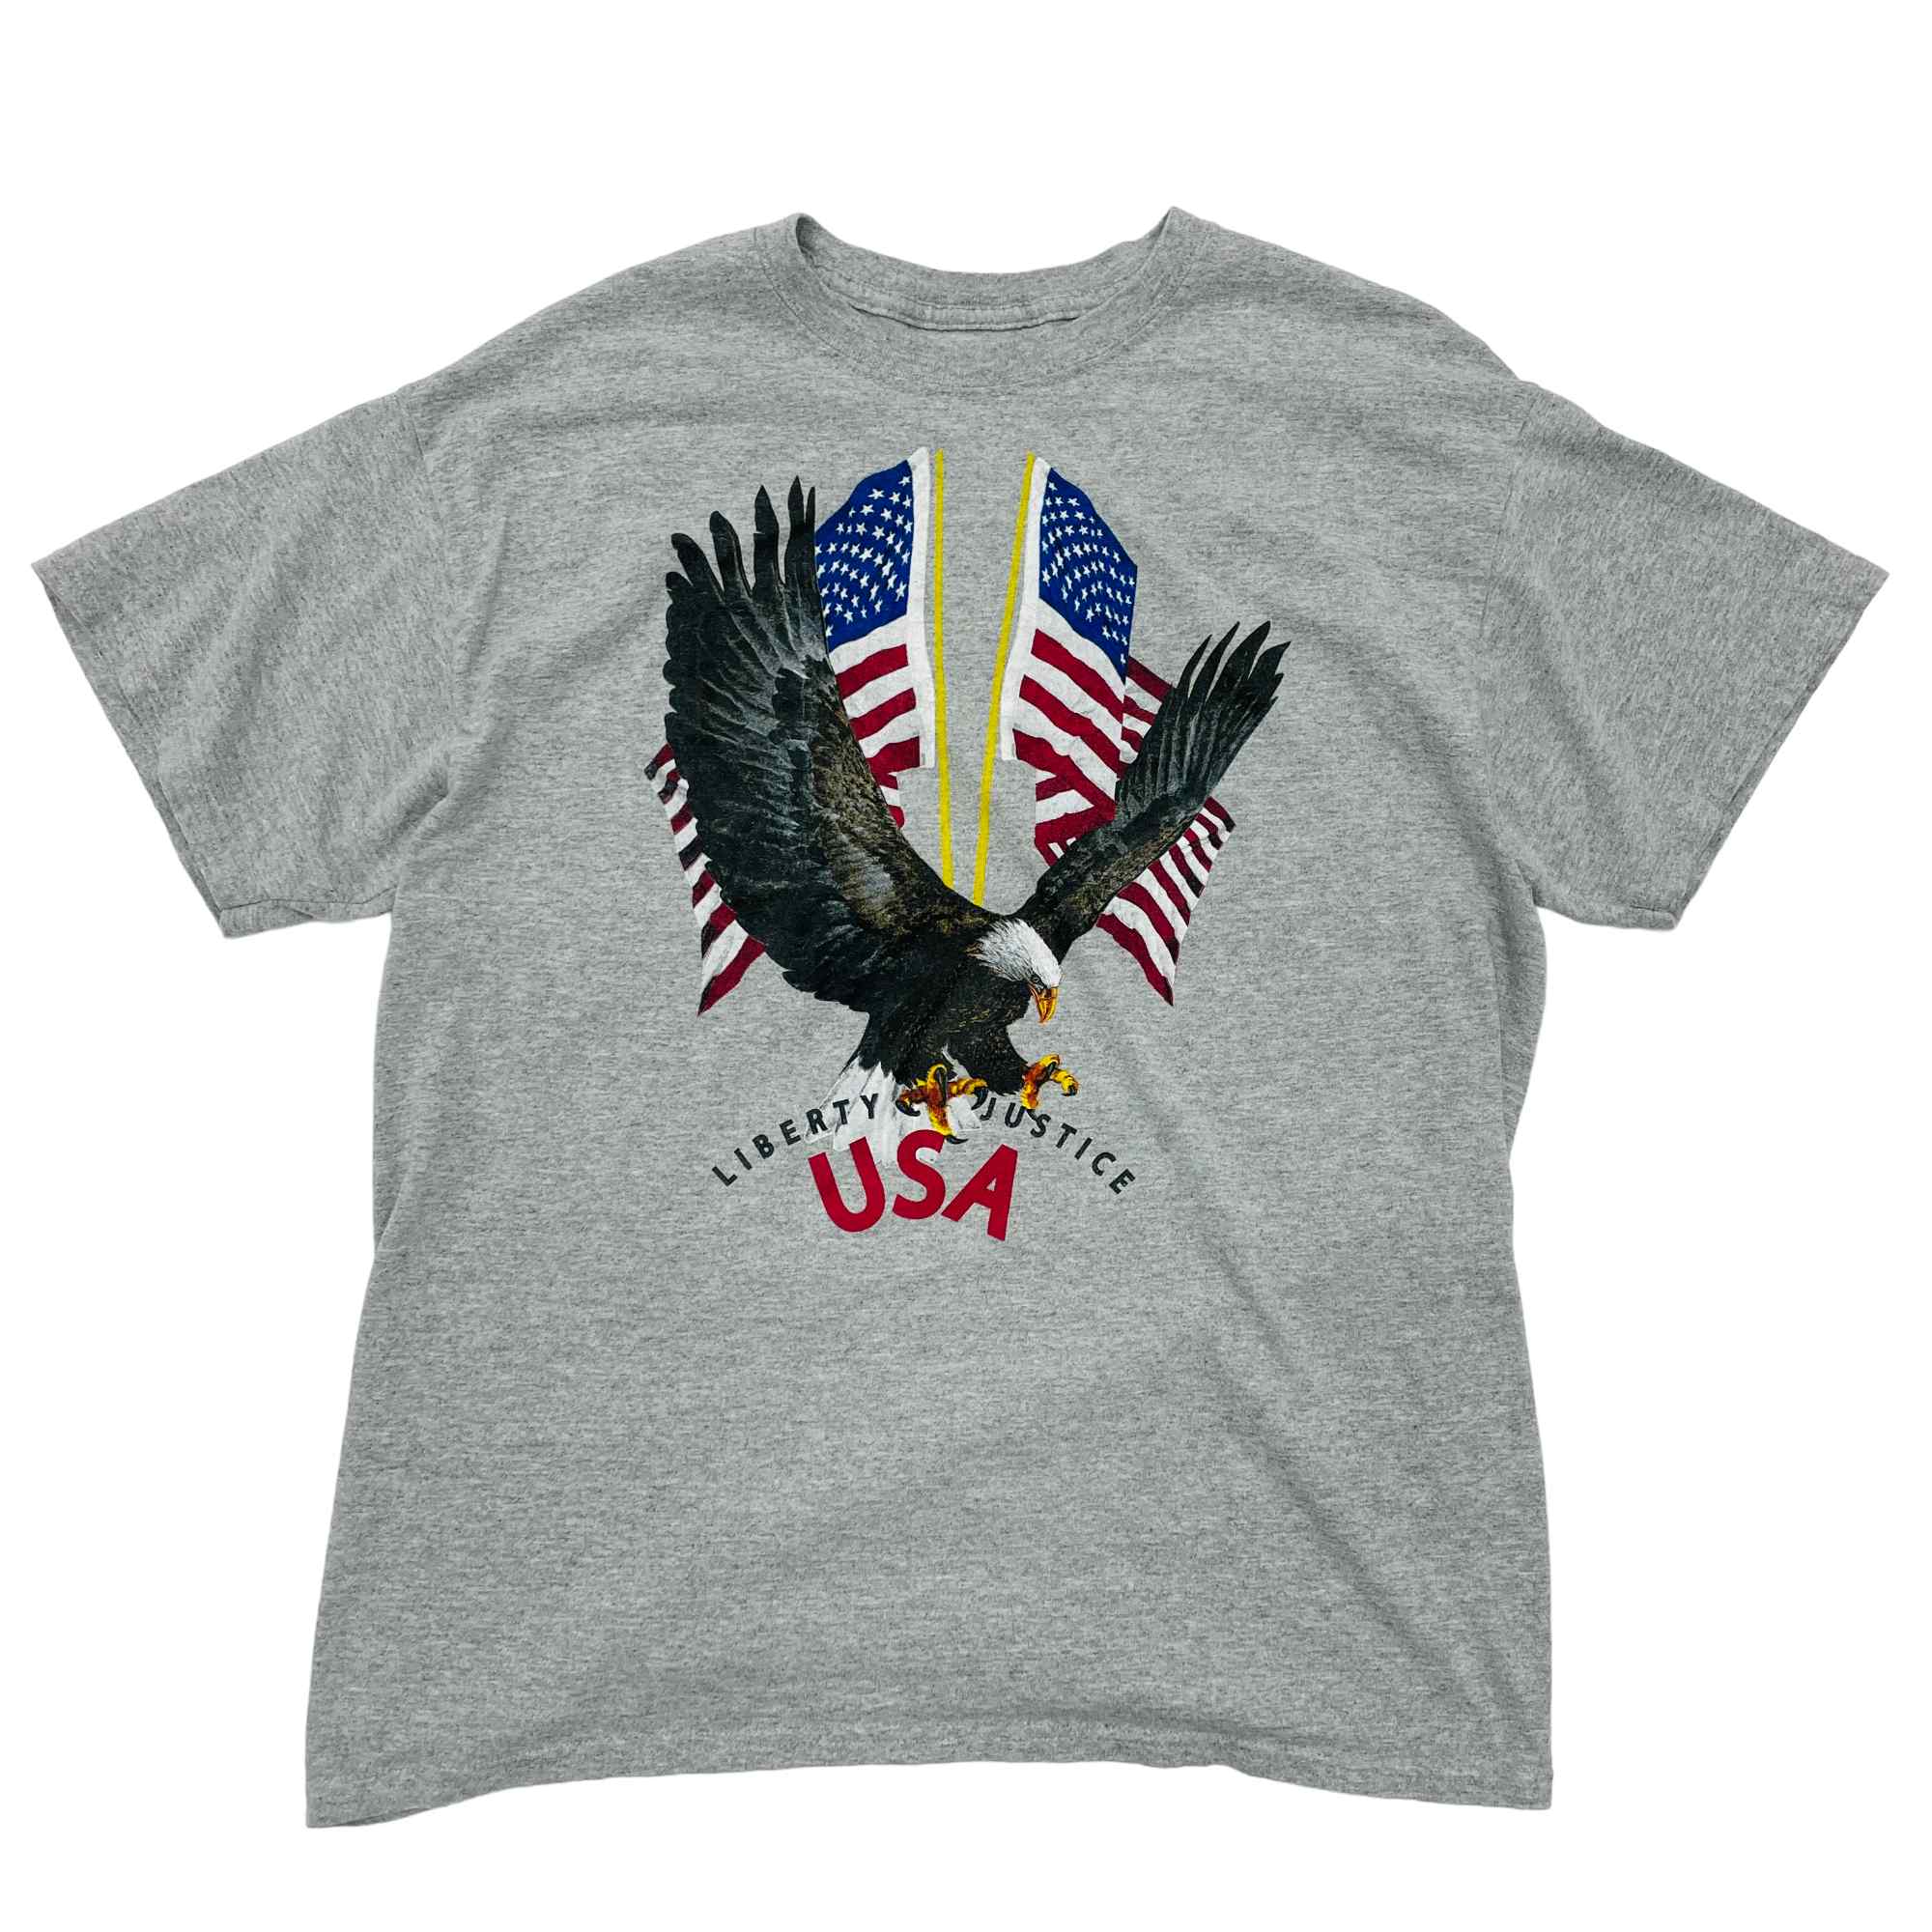 'Liberty and Justice' Harley Davidson T-Shirt - Large